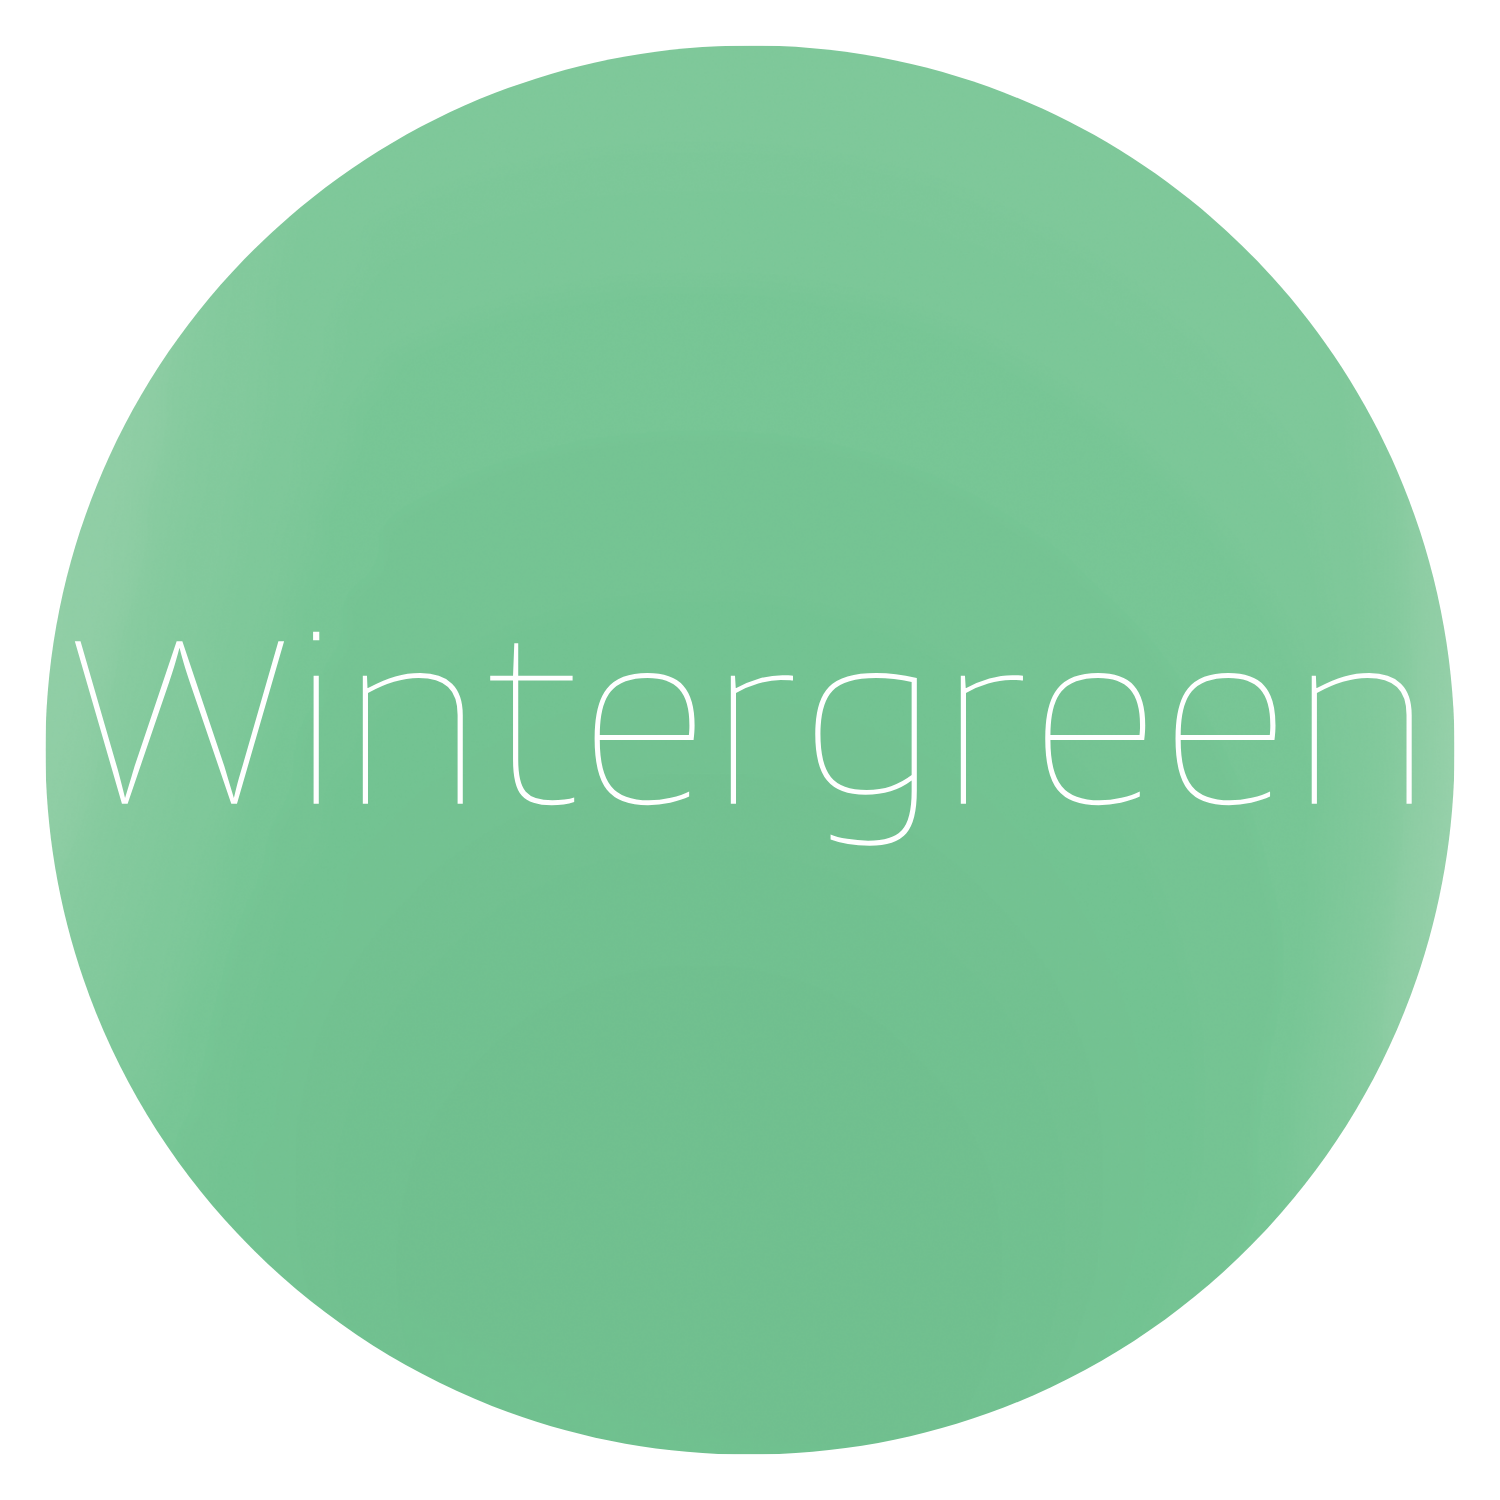 Wintergreen